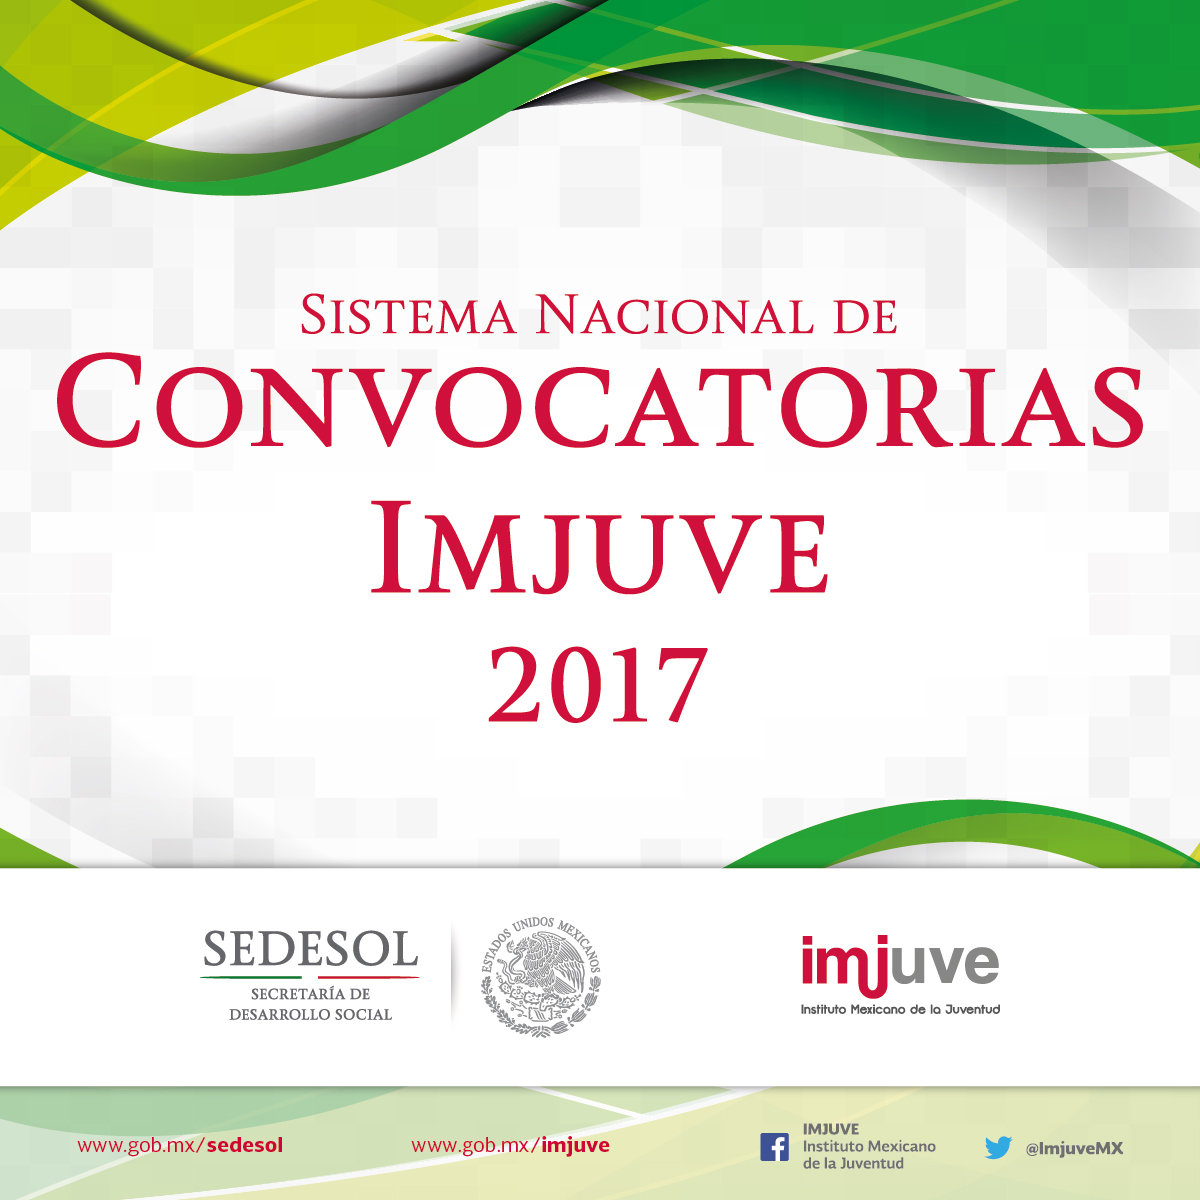 /cms/uploads/image/file/267937/Banner-Convocatorias2017.jpg